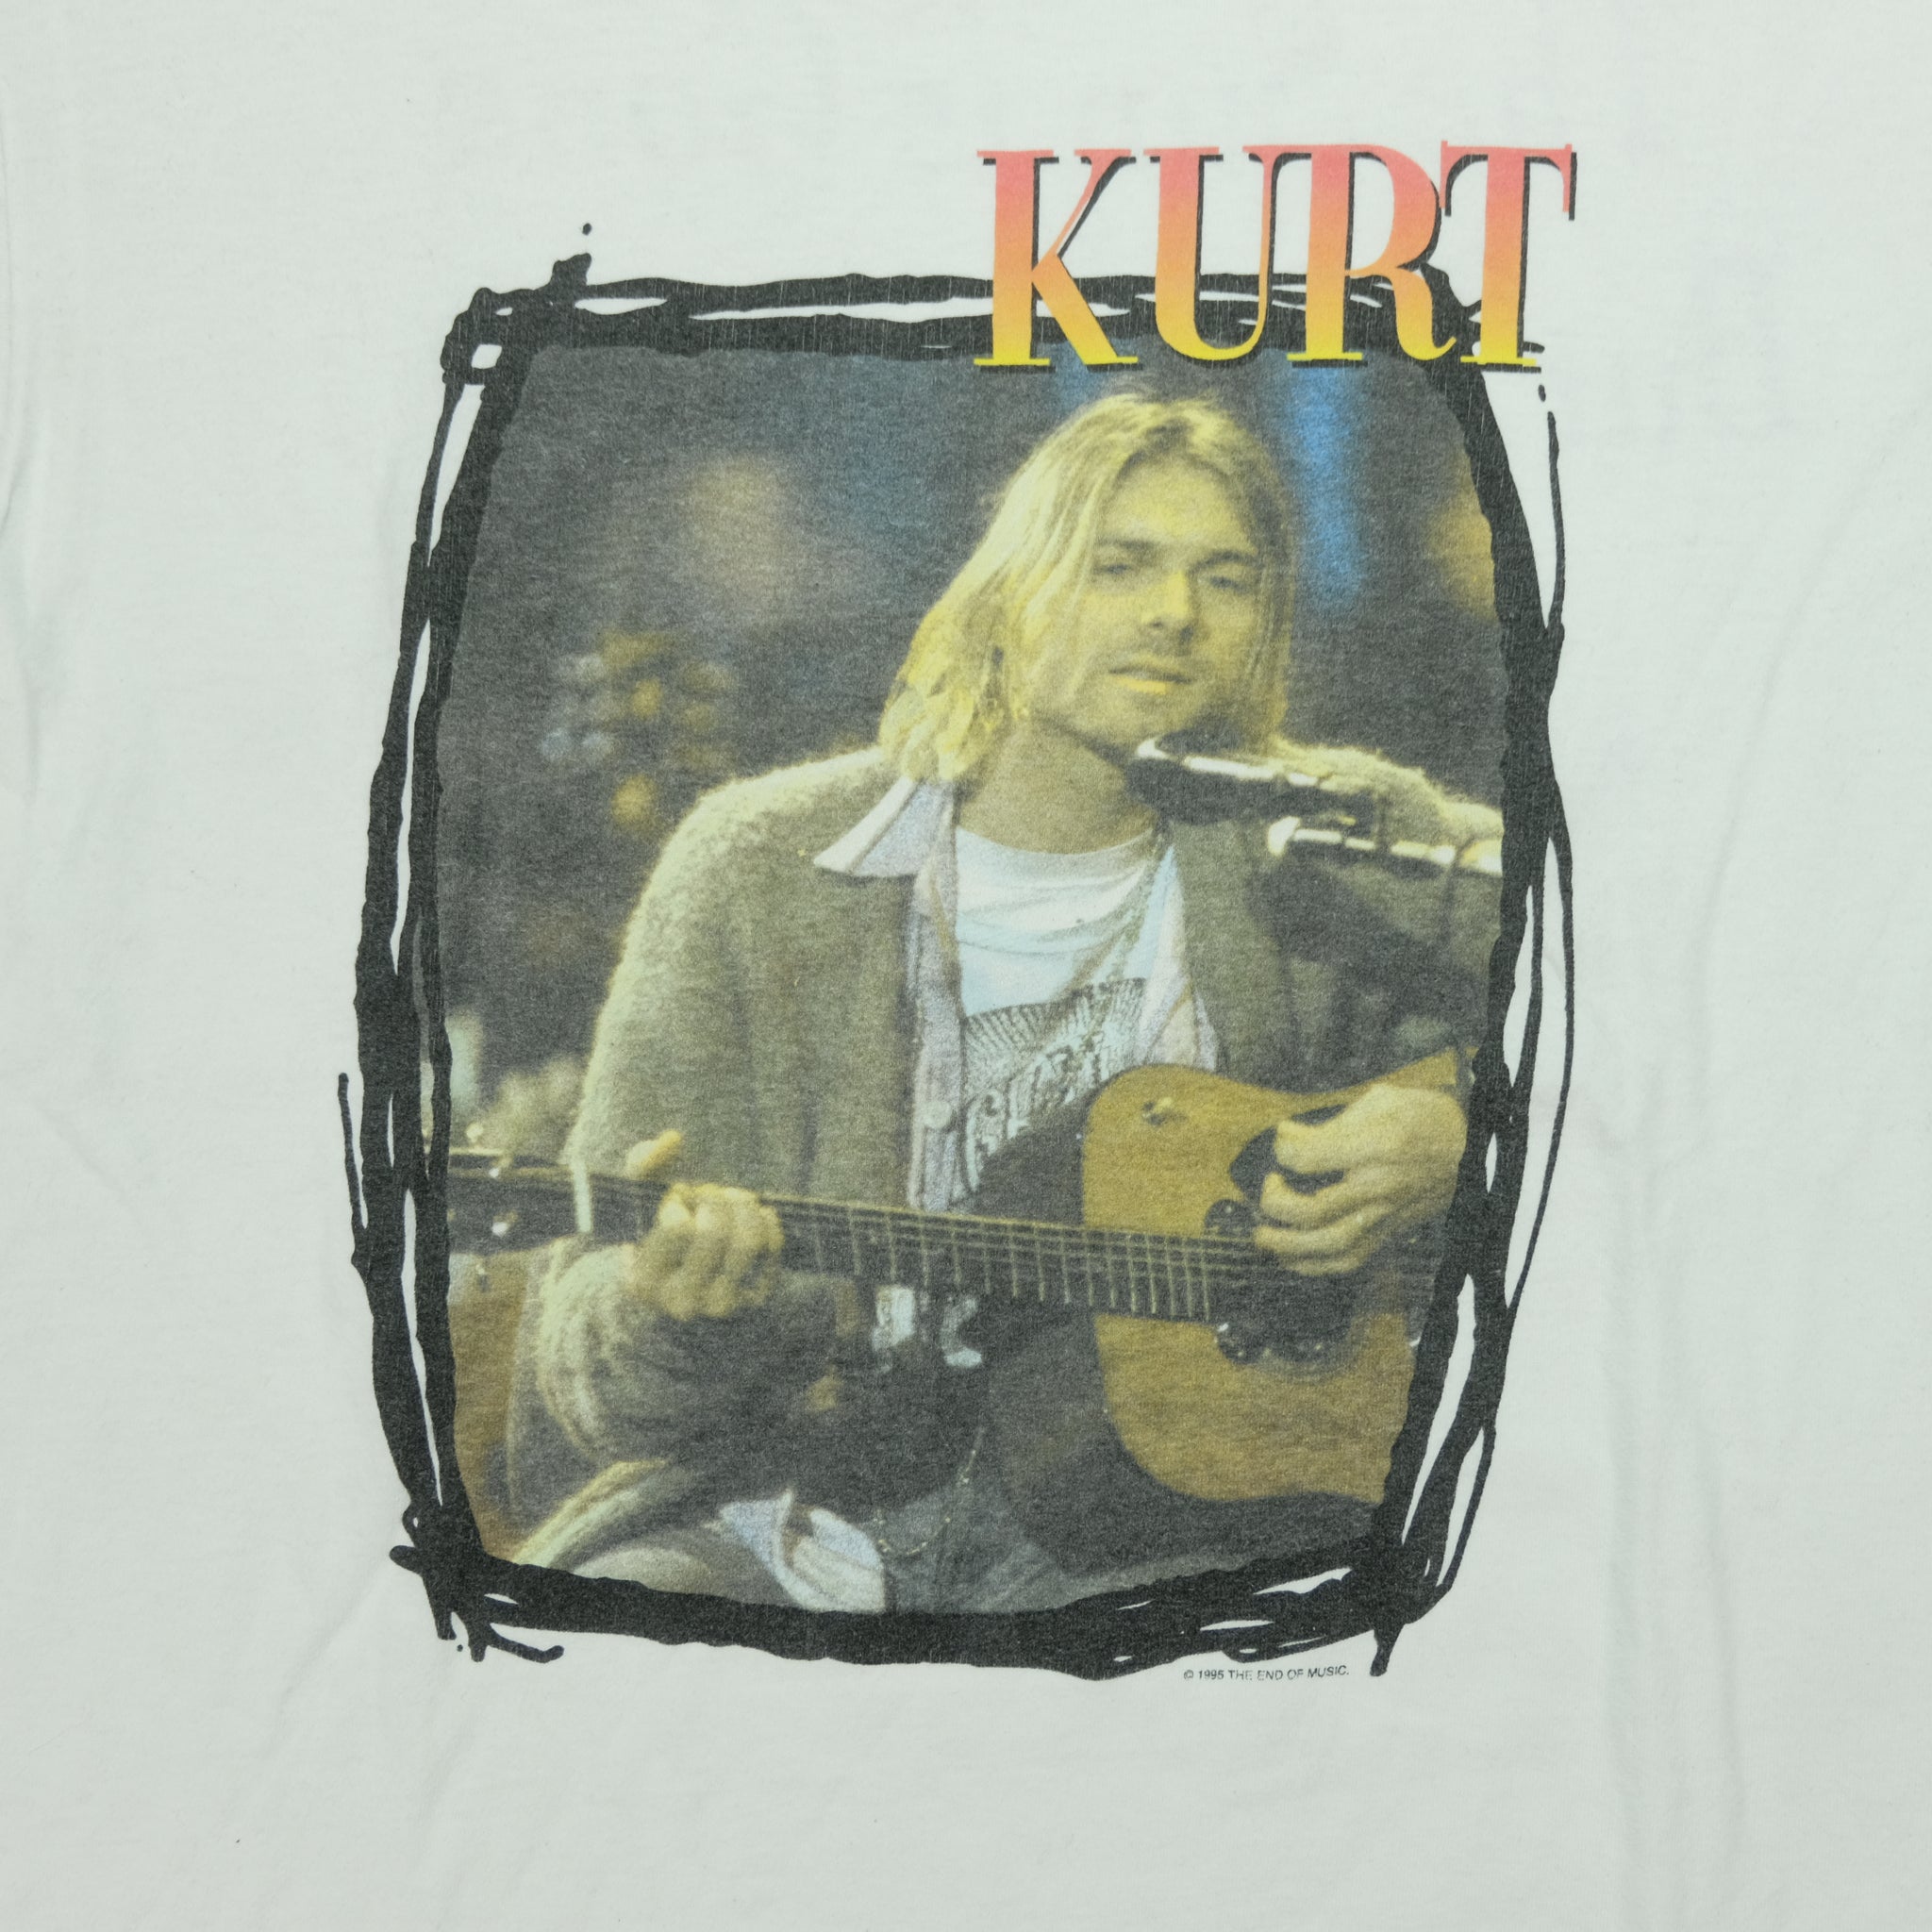 Vintage 1995 Kurt Cobain Nirvana Unplugged The Sun Is Gone